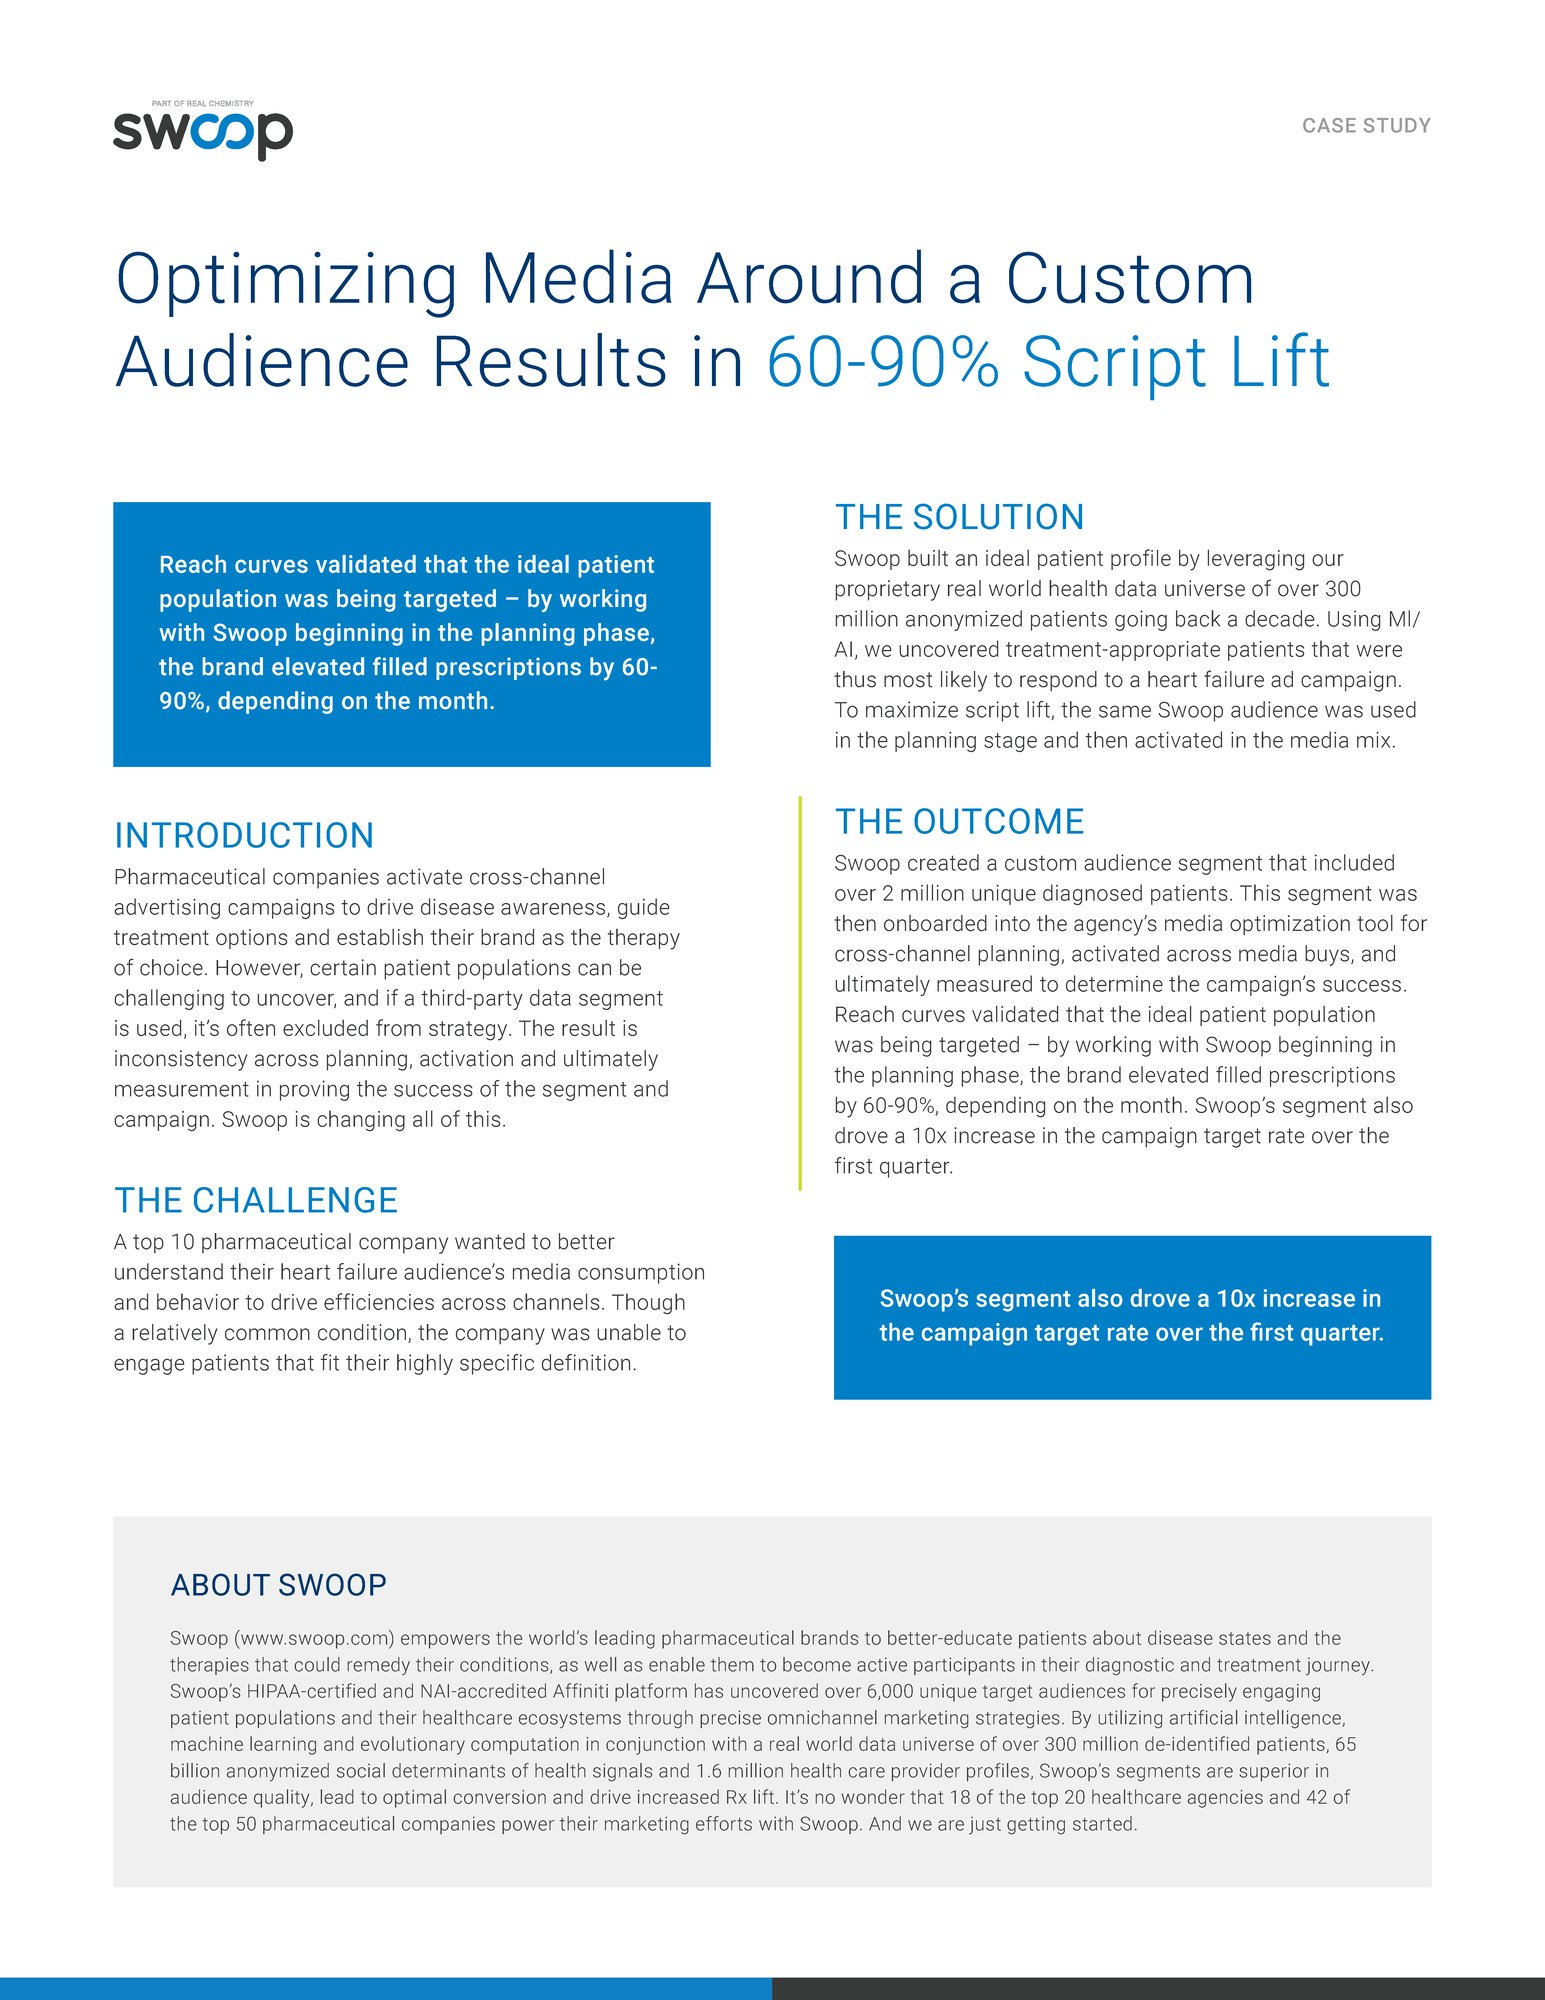 Optimizing Media Around a Custom Audience